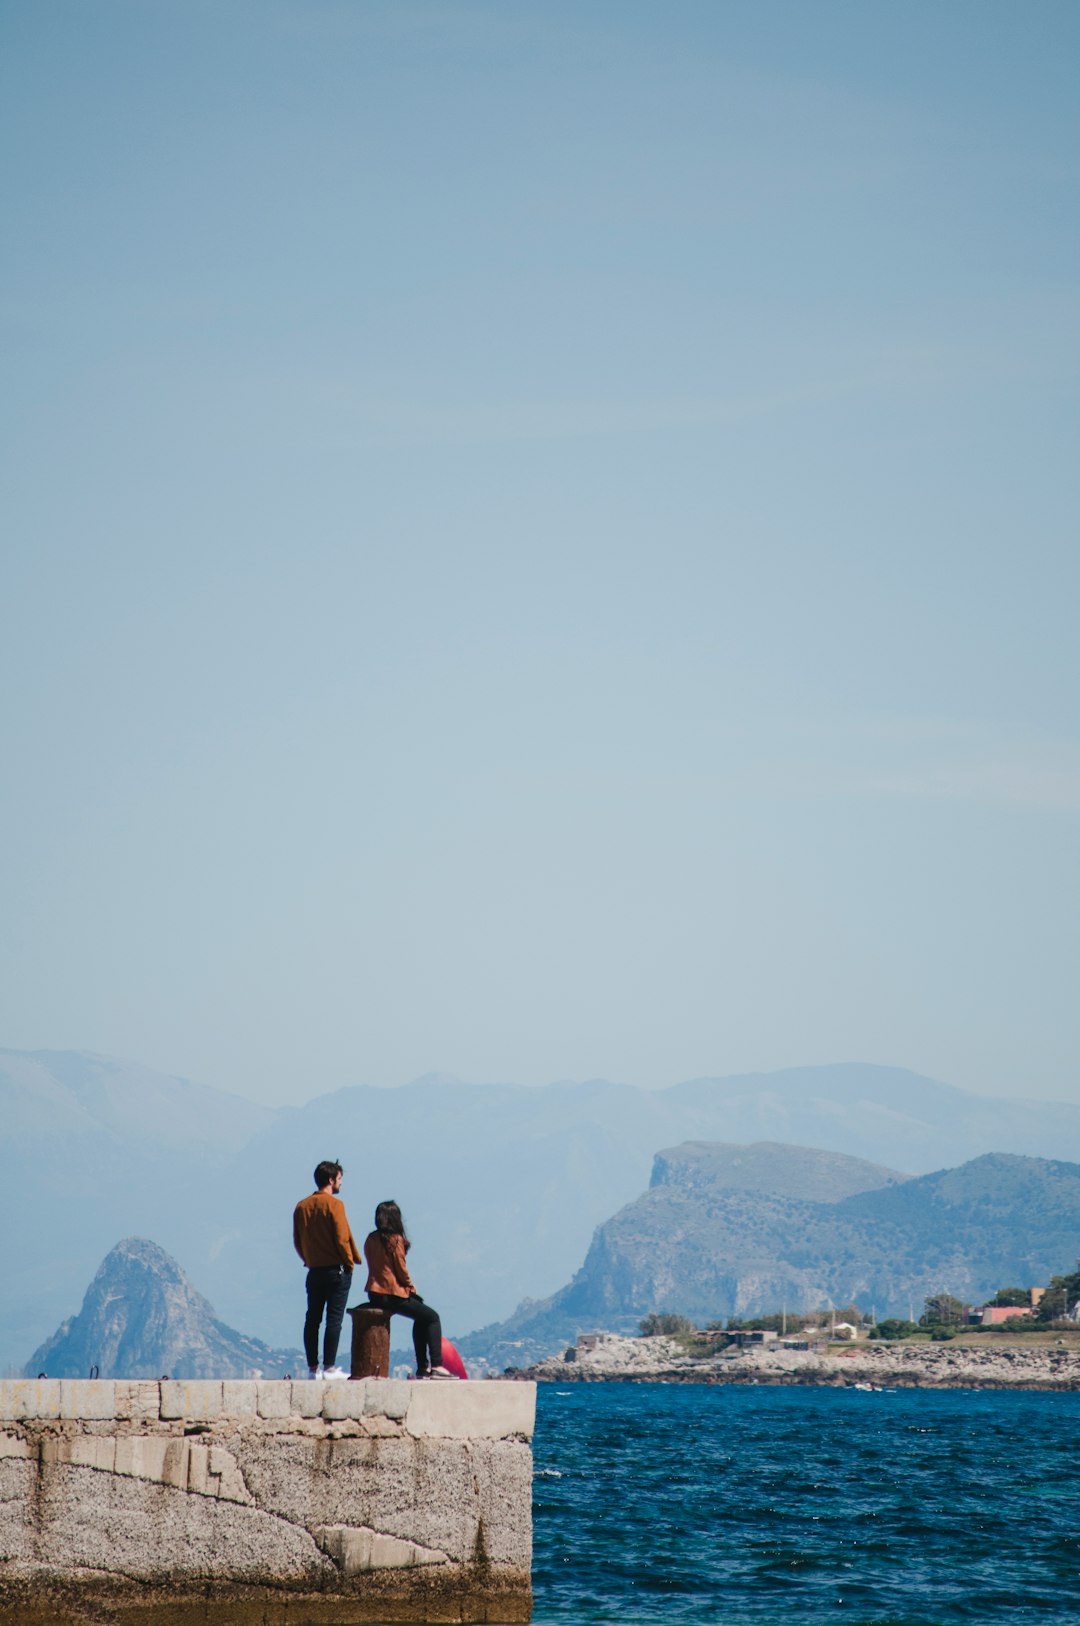 man and woman on concrete platform facing ocean